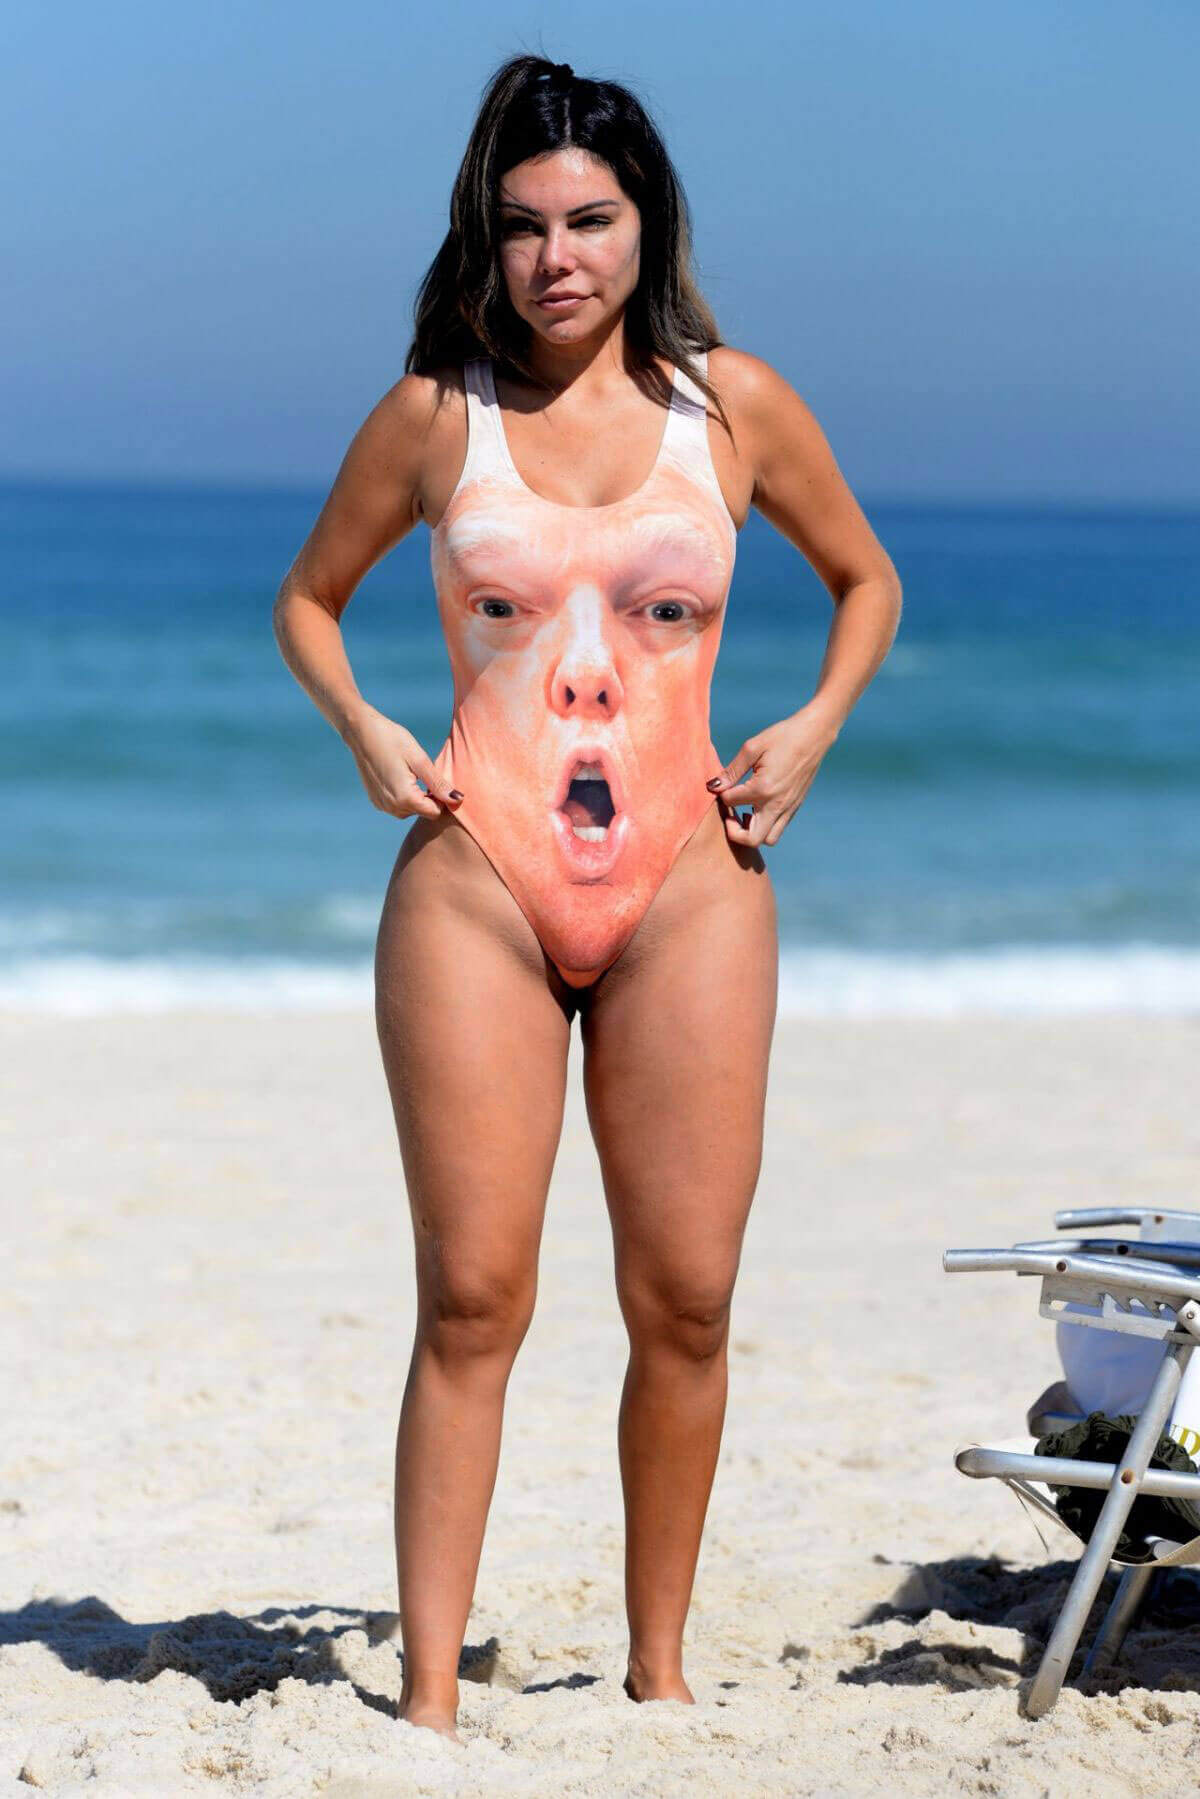 Liziane Gutierrez in Shocked Trump Swimsuit at a Beach in Brazil Photos